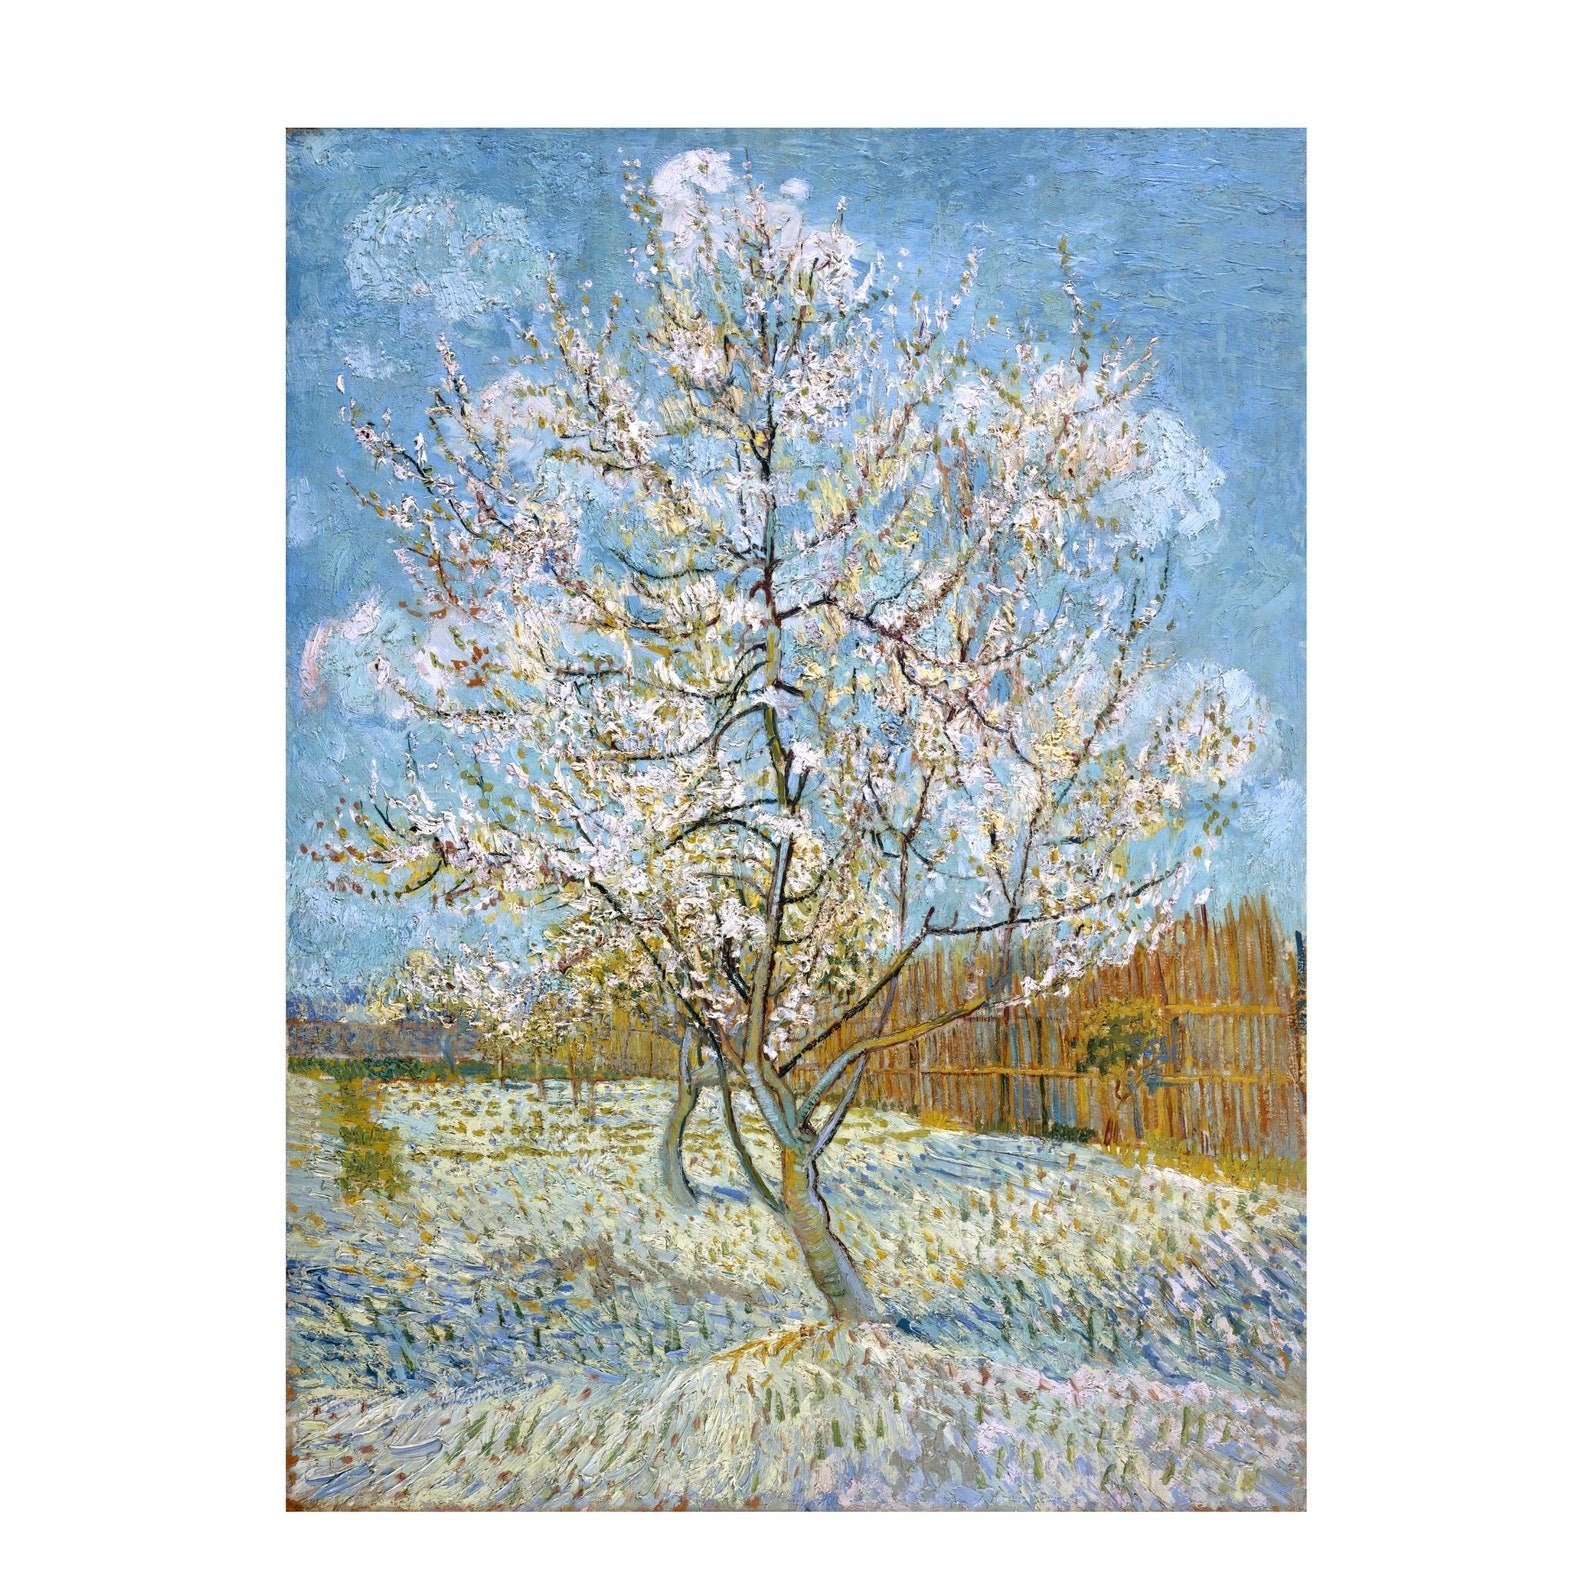 VINCENT VAN GOGH - Peach Tree In Blossom - Pathos Studio -